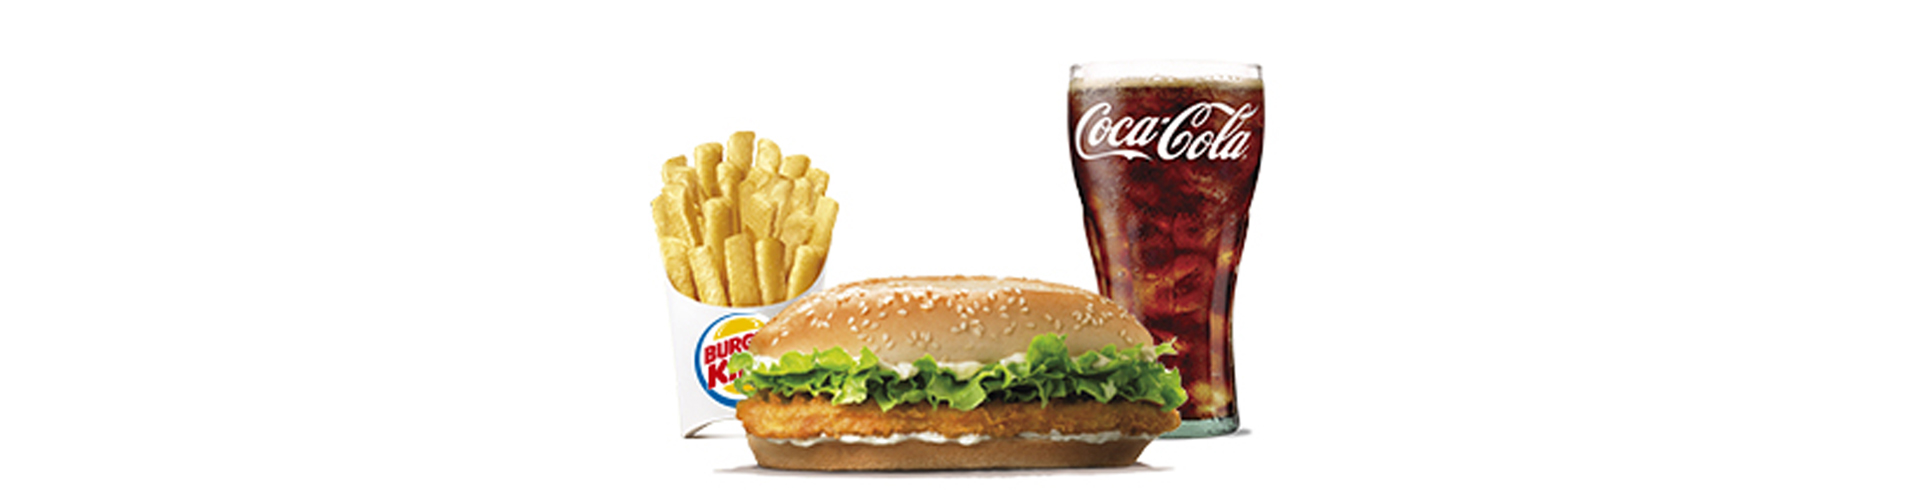 menu-long-chicken-burgerking-40001720-agua-ensalada